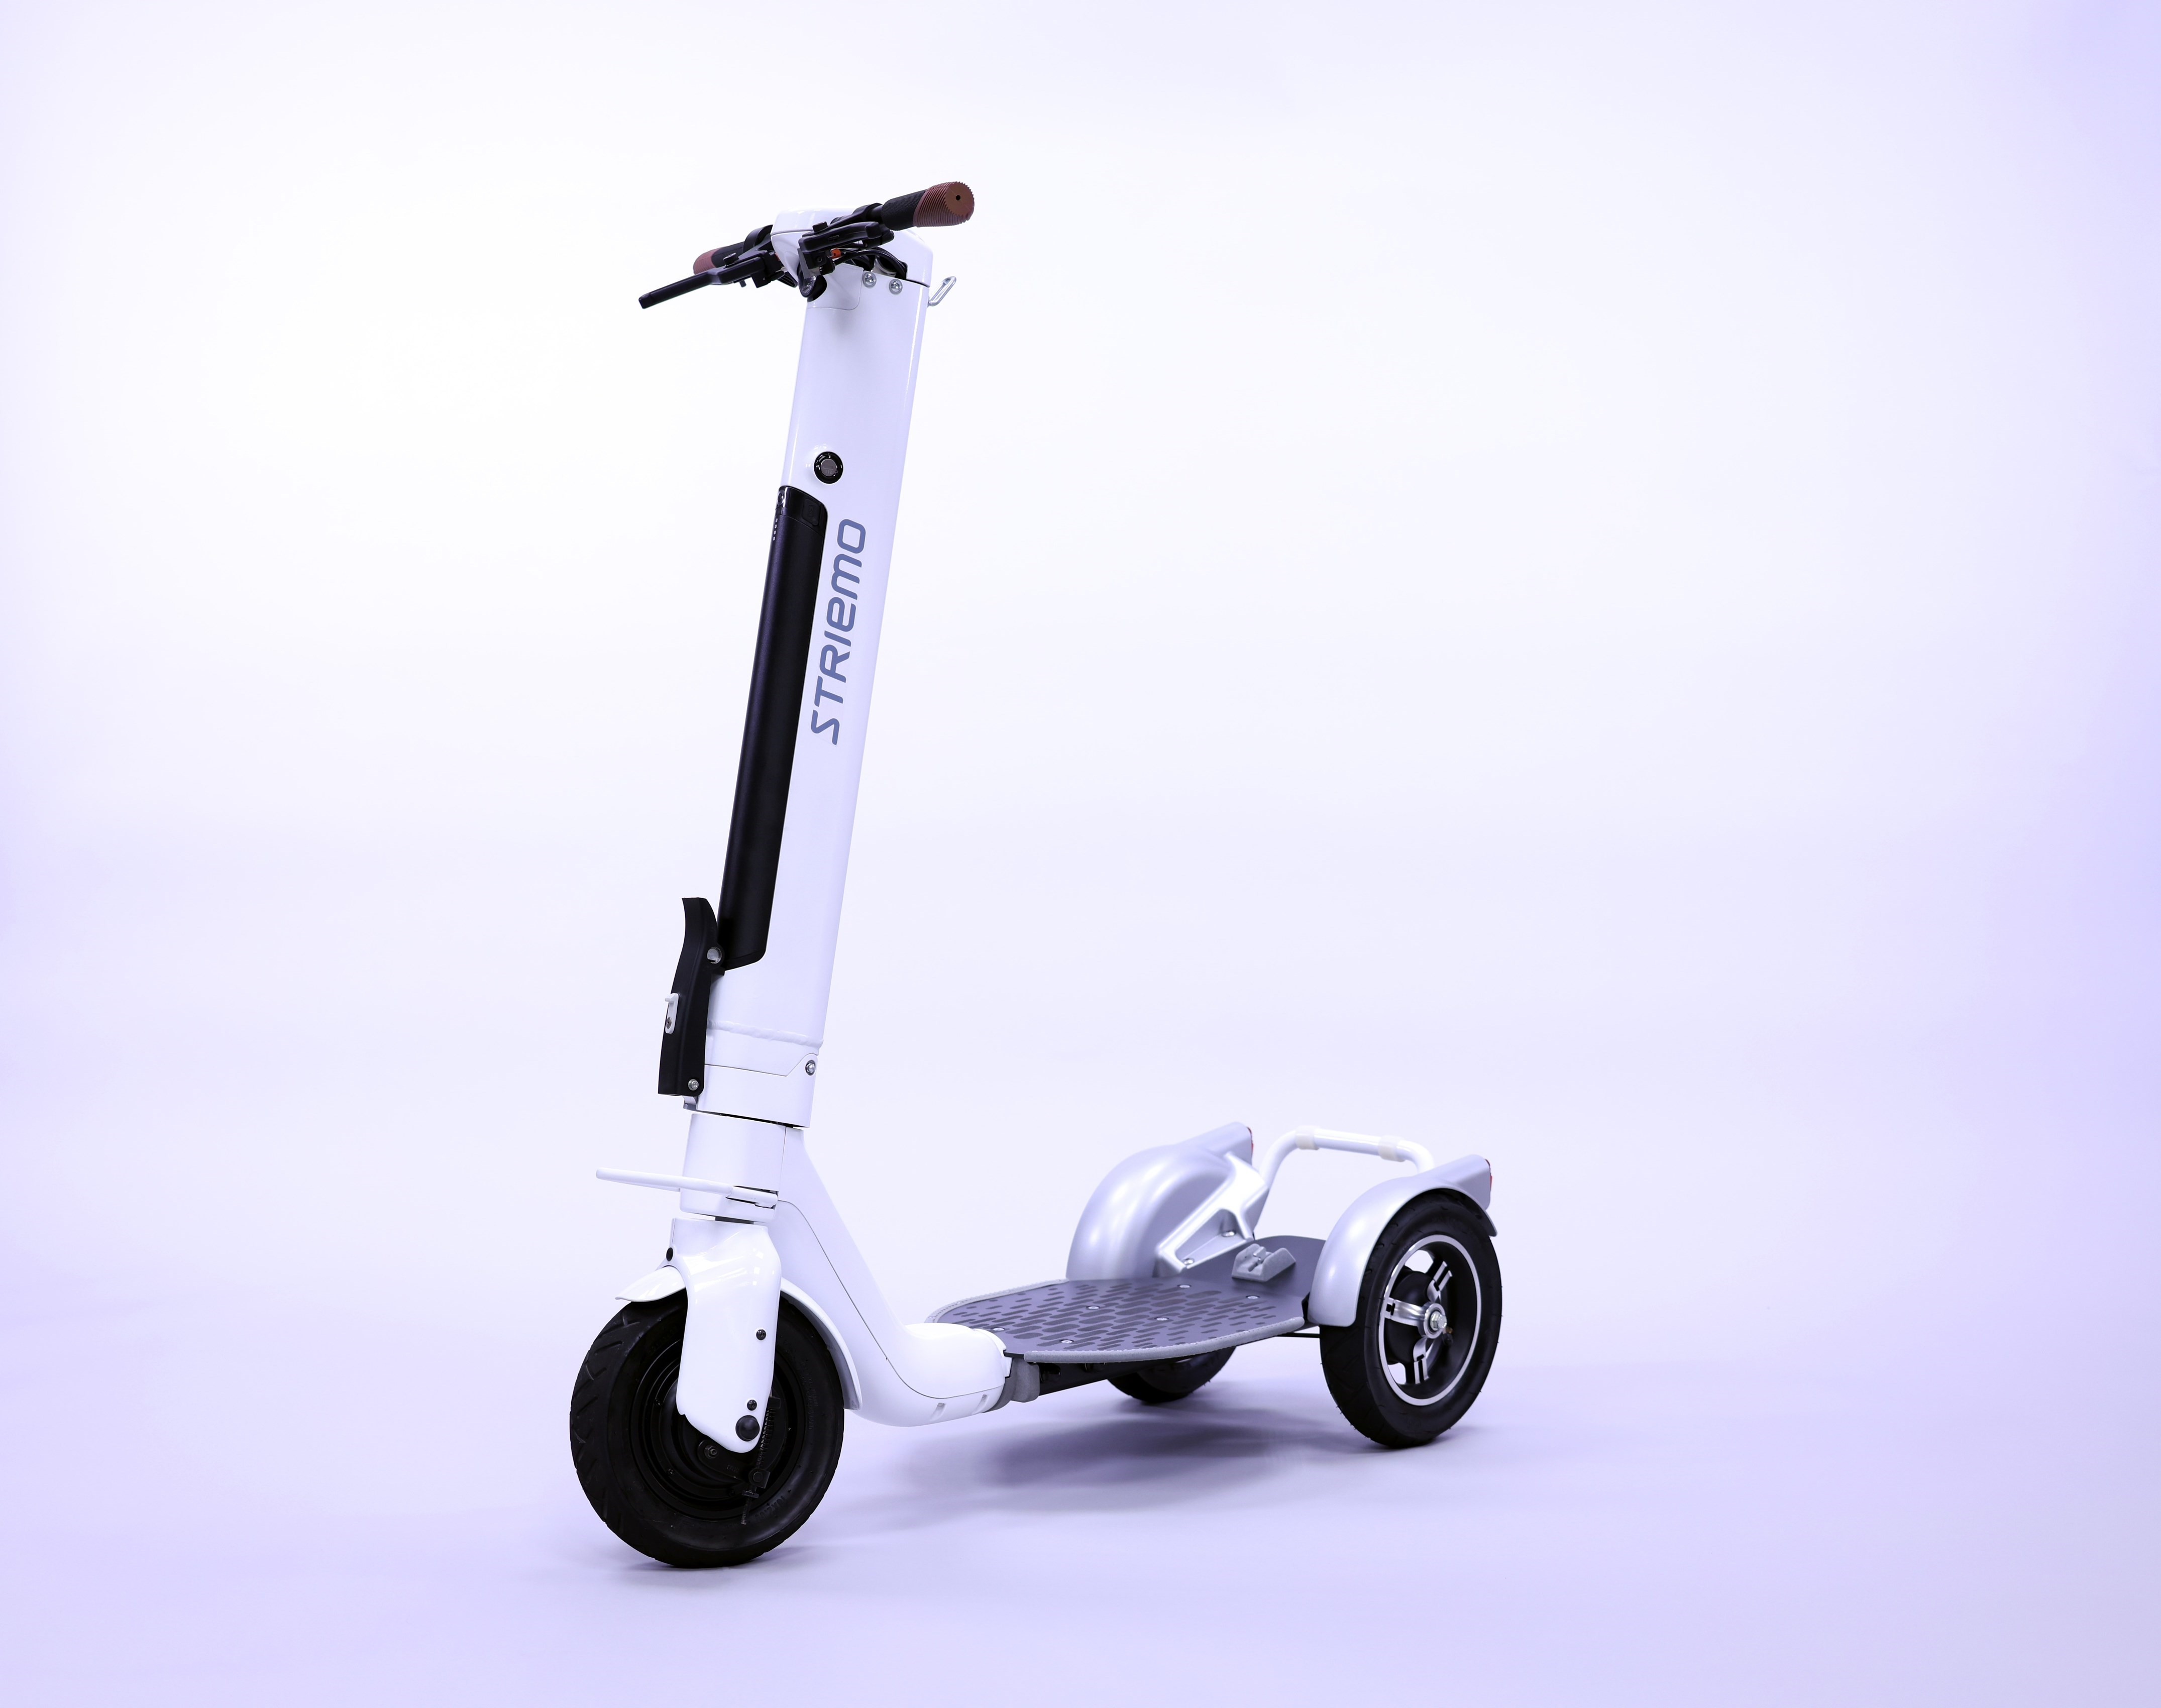 Honda'dan üç tekerlekli elektrikli scooter: Striemo